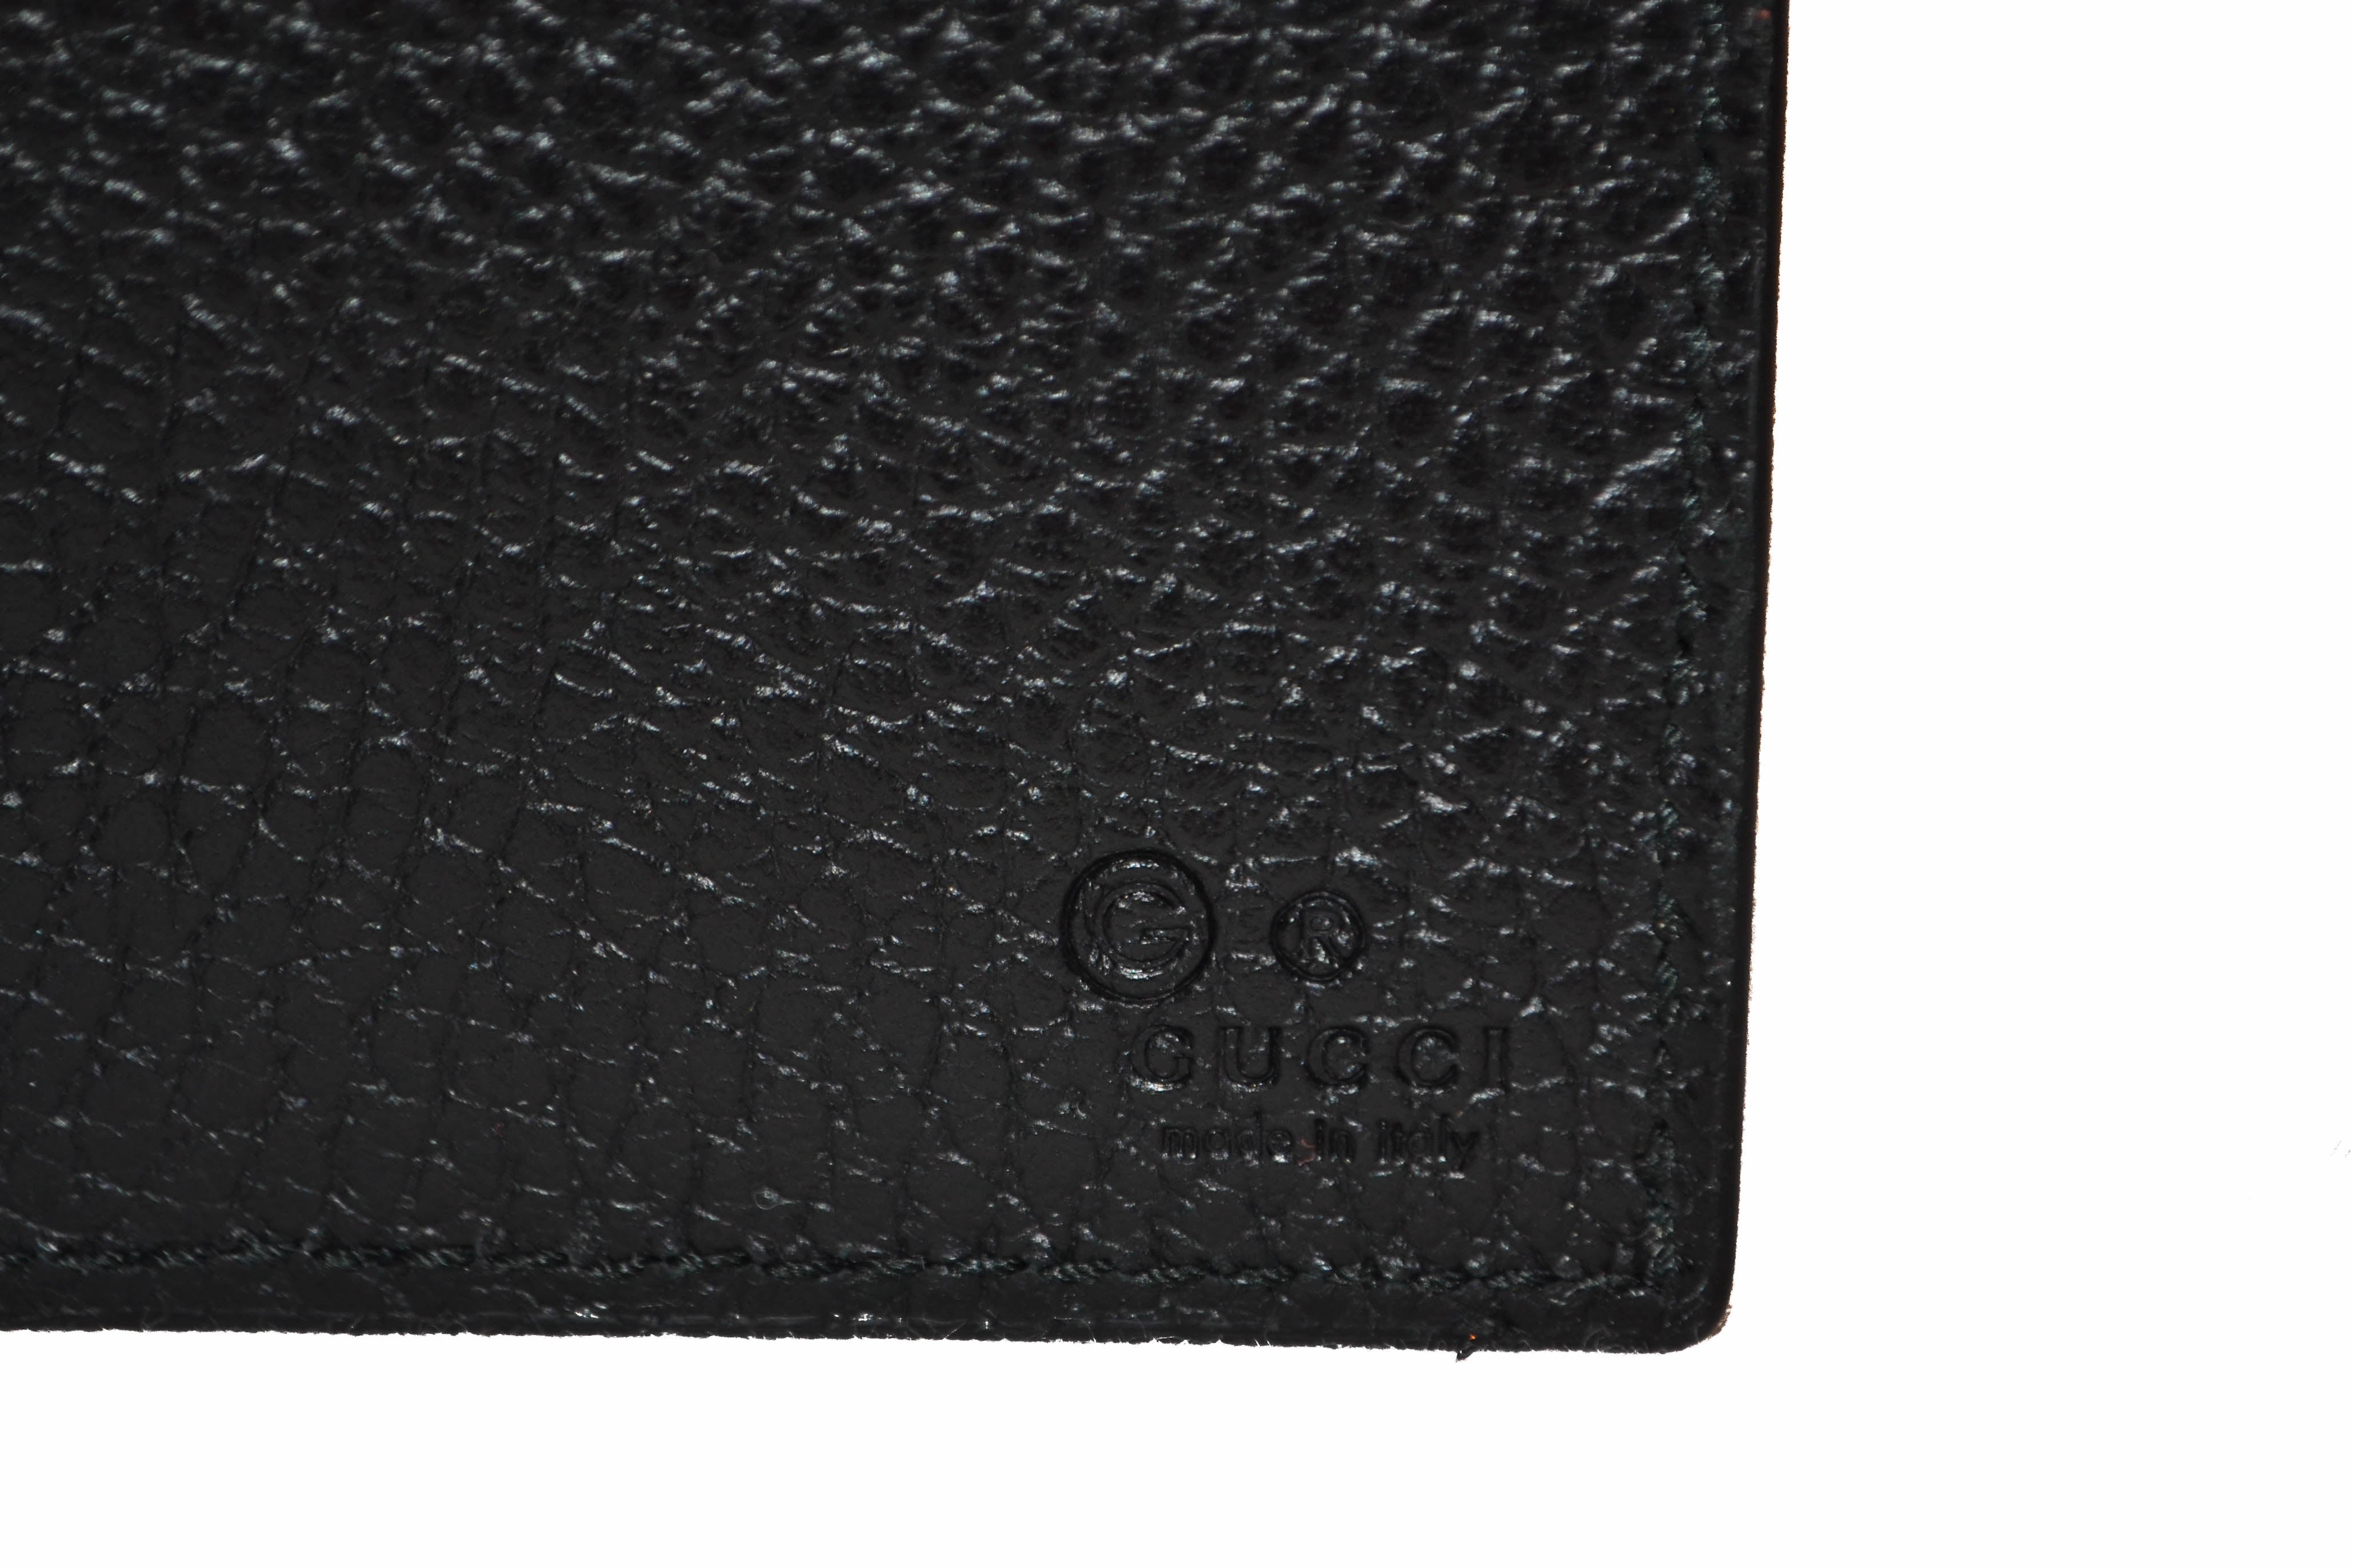 New Authentic Gucci Black Men's Leather Bi-Fold Wallet